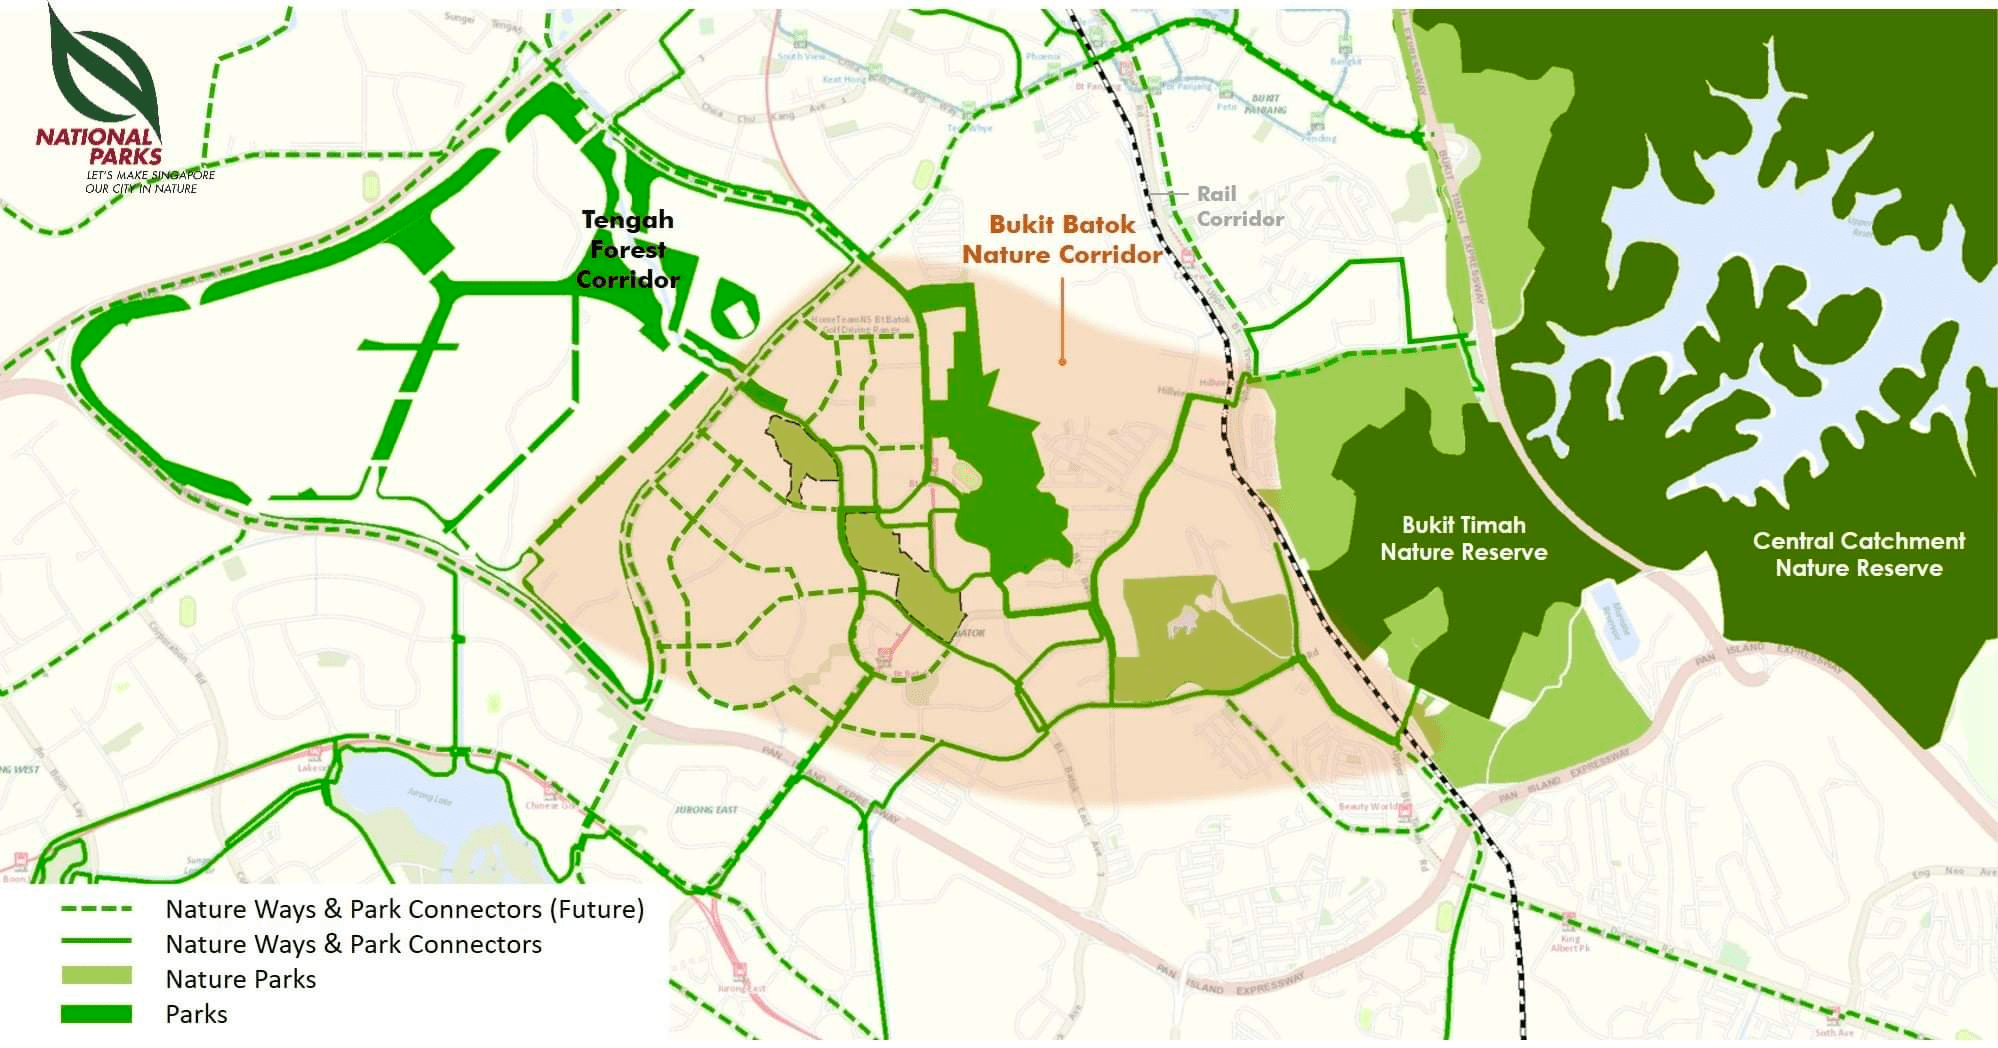 Bukit Batok Nature Corridor Map